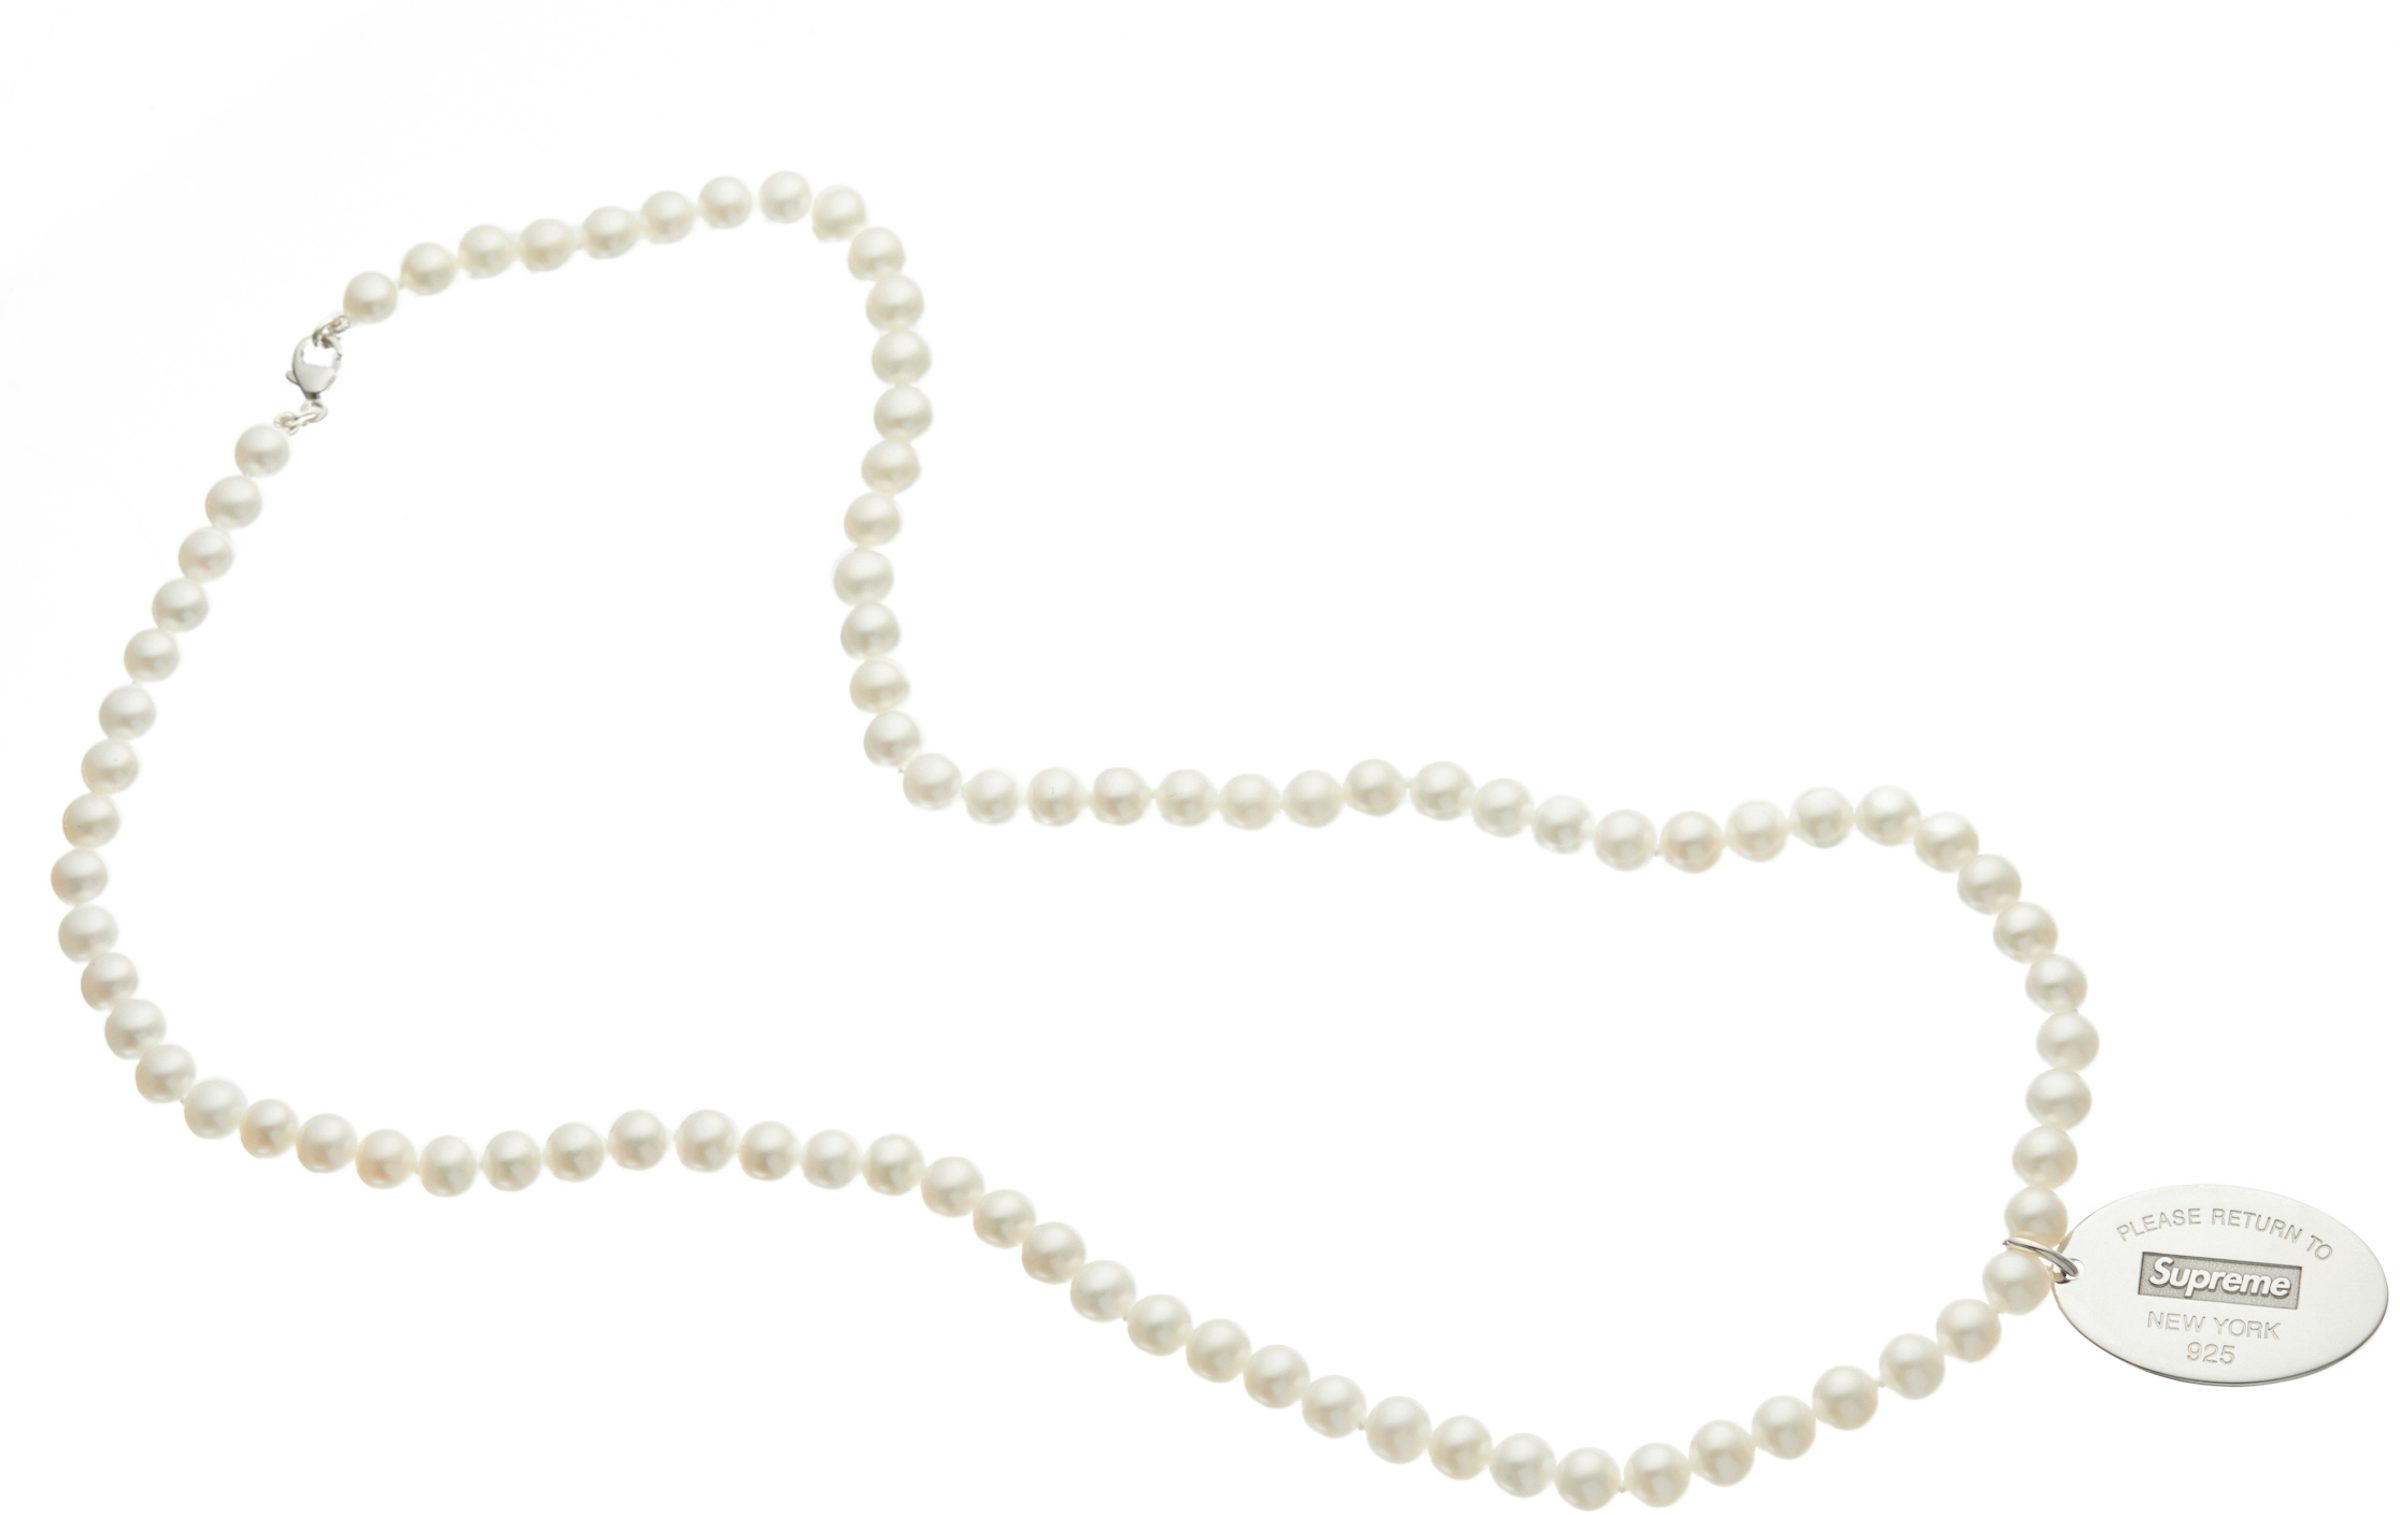 Half & Half Lock Necklace 24 in / Oval Pearls / Gold